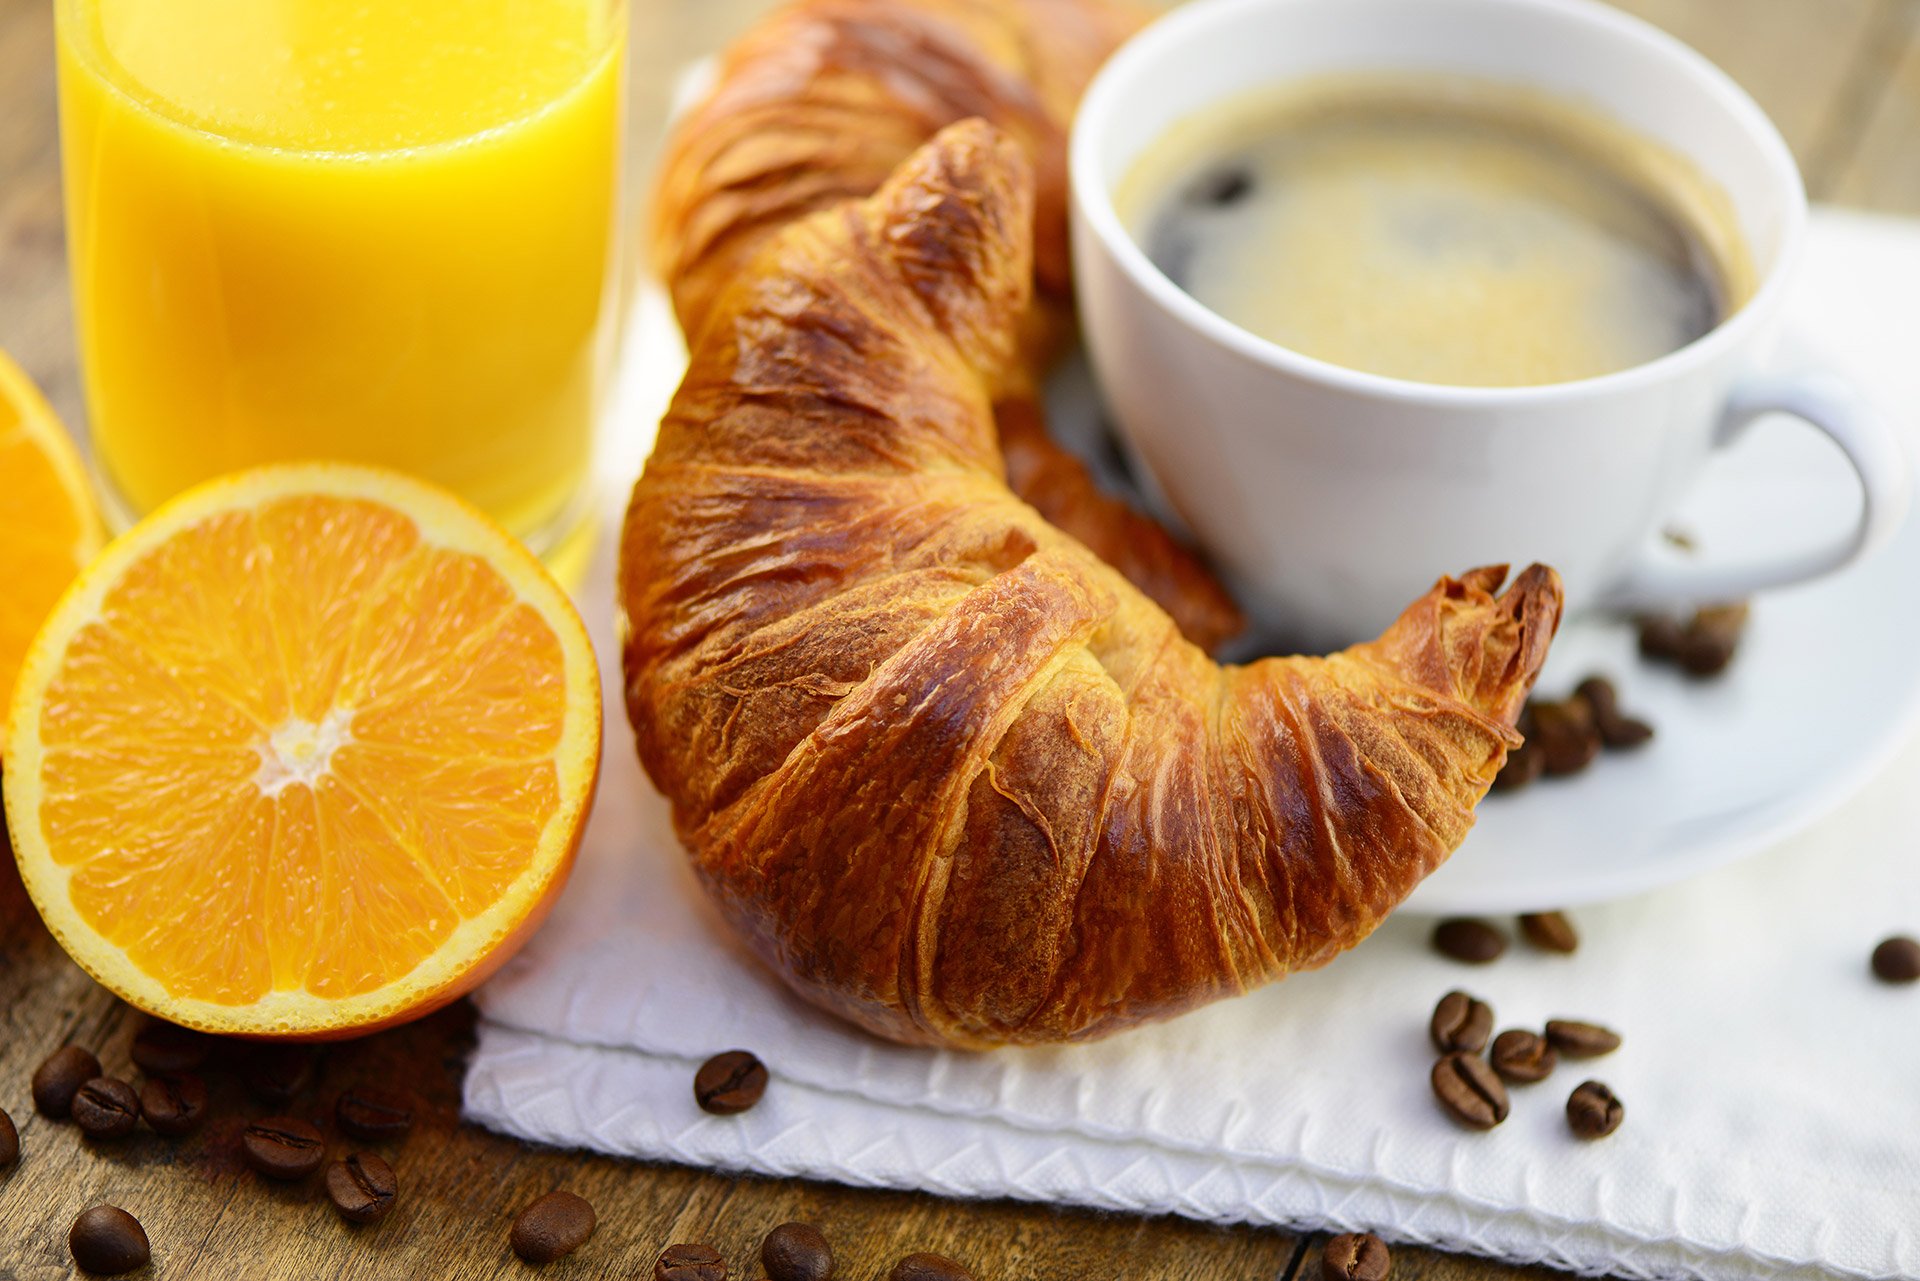 Best Western Premier Marais Grands Boulevards express breakfast to go 